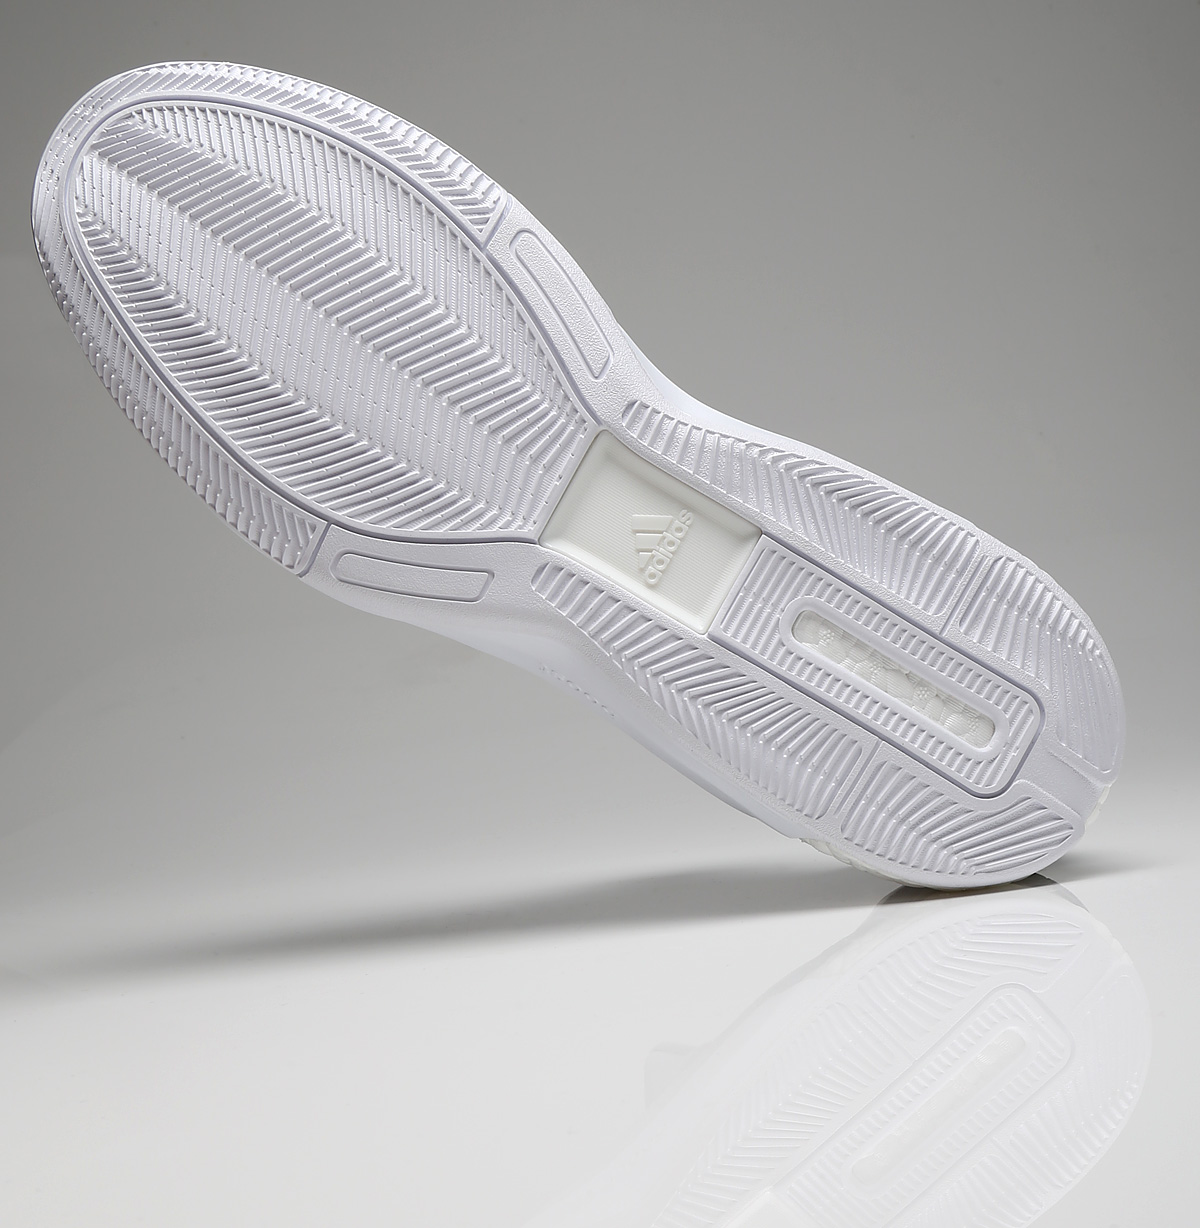 adidas-Crazy-Light-Boost-2015-White-pe-hardens-08